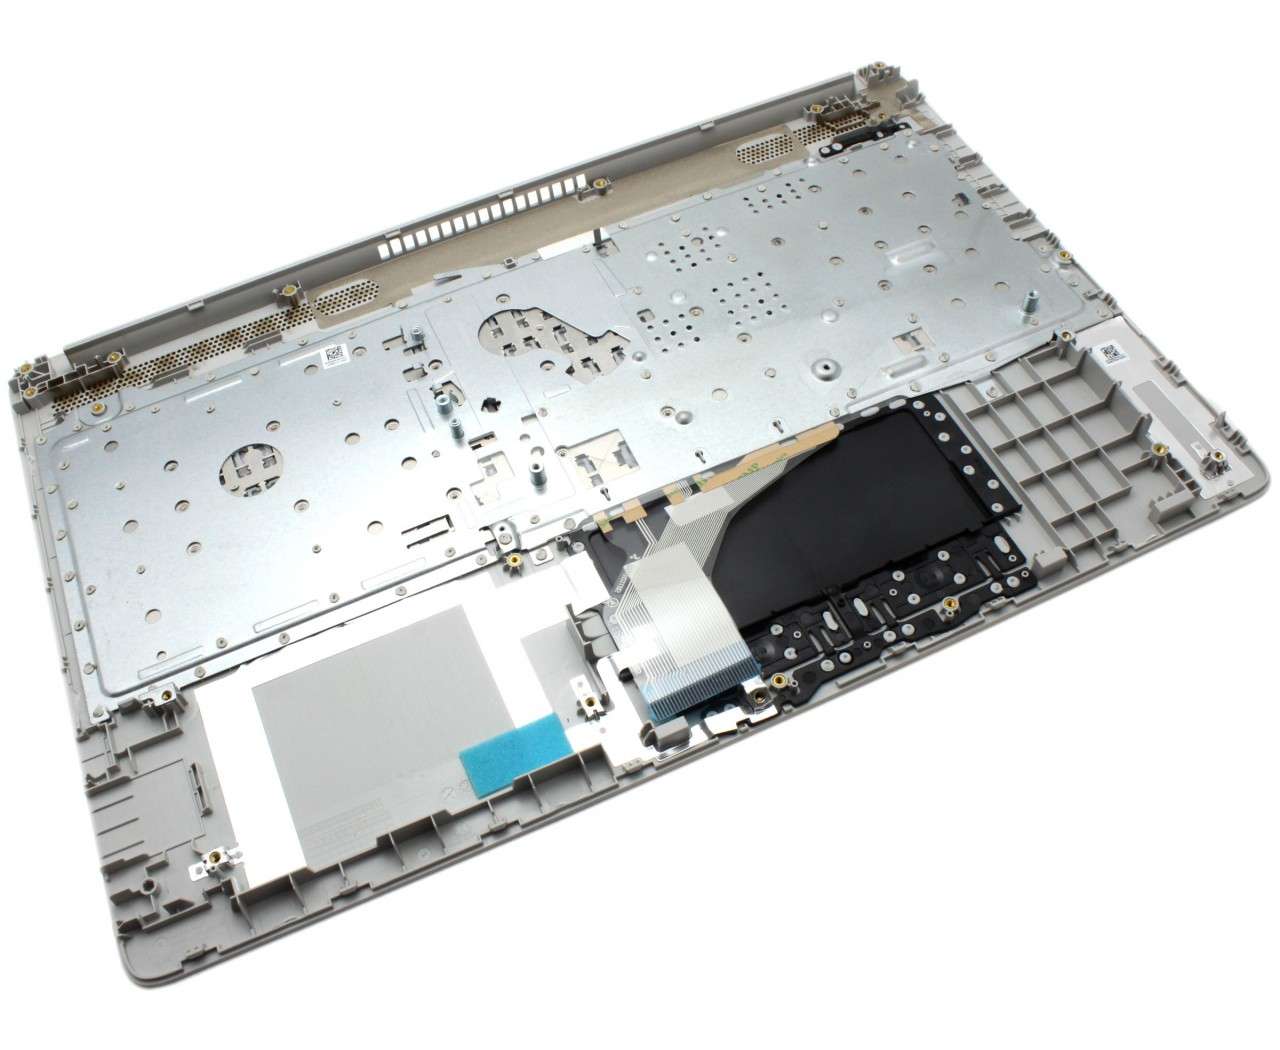 Tastatura HP AM29M000100 argintie cu Palmrest argintiu HP